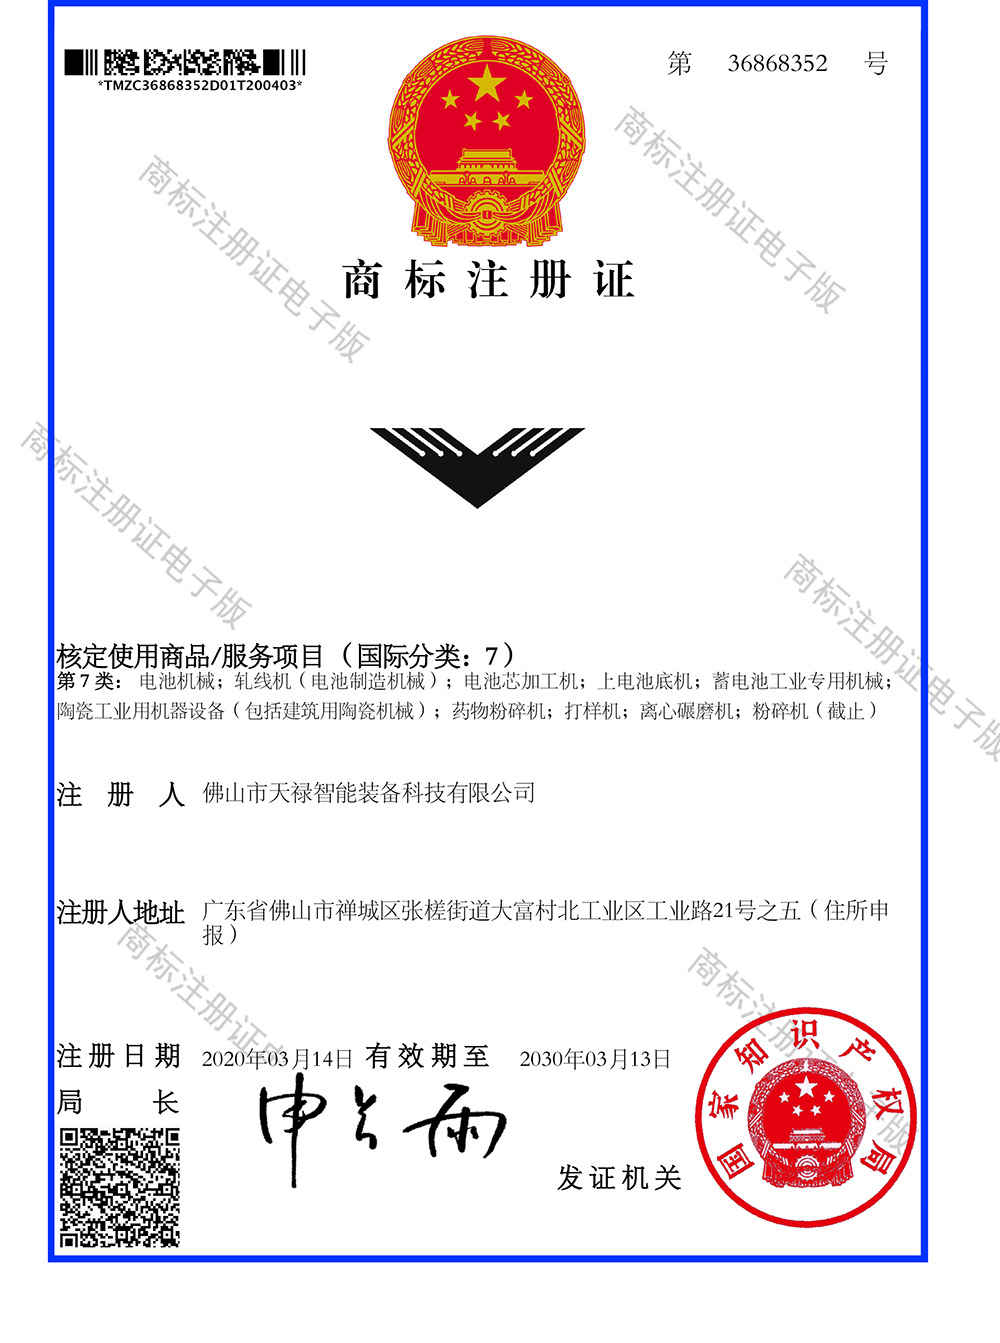 Trademark registration certificate (electronic)